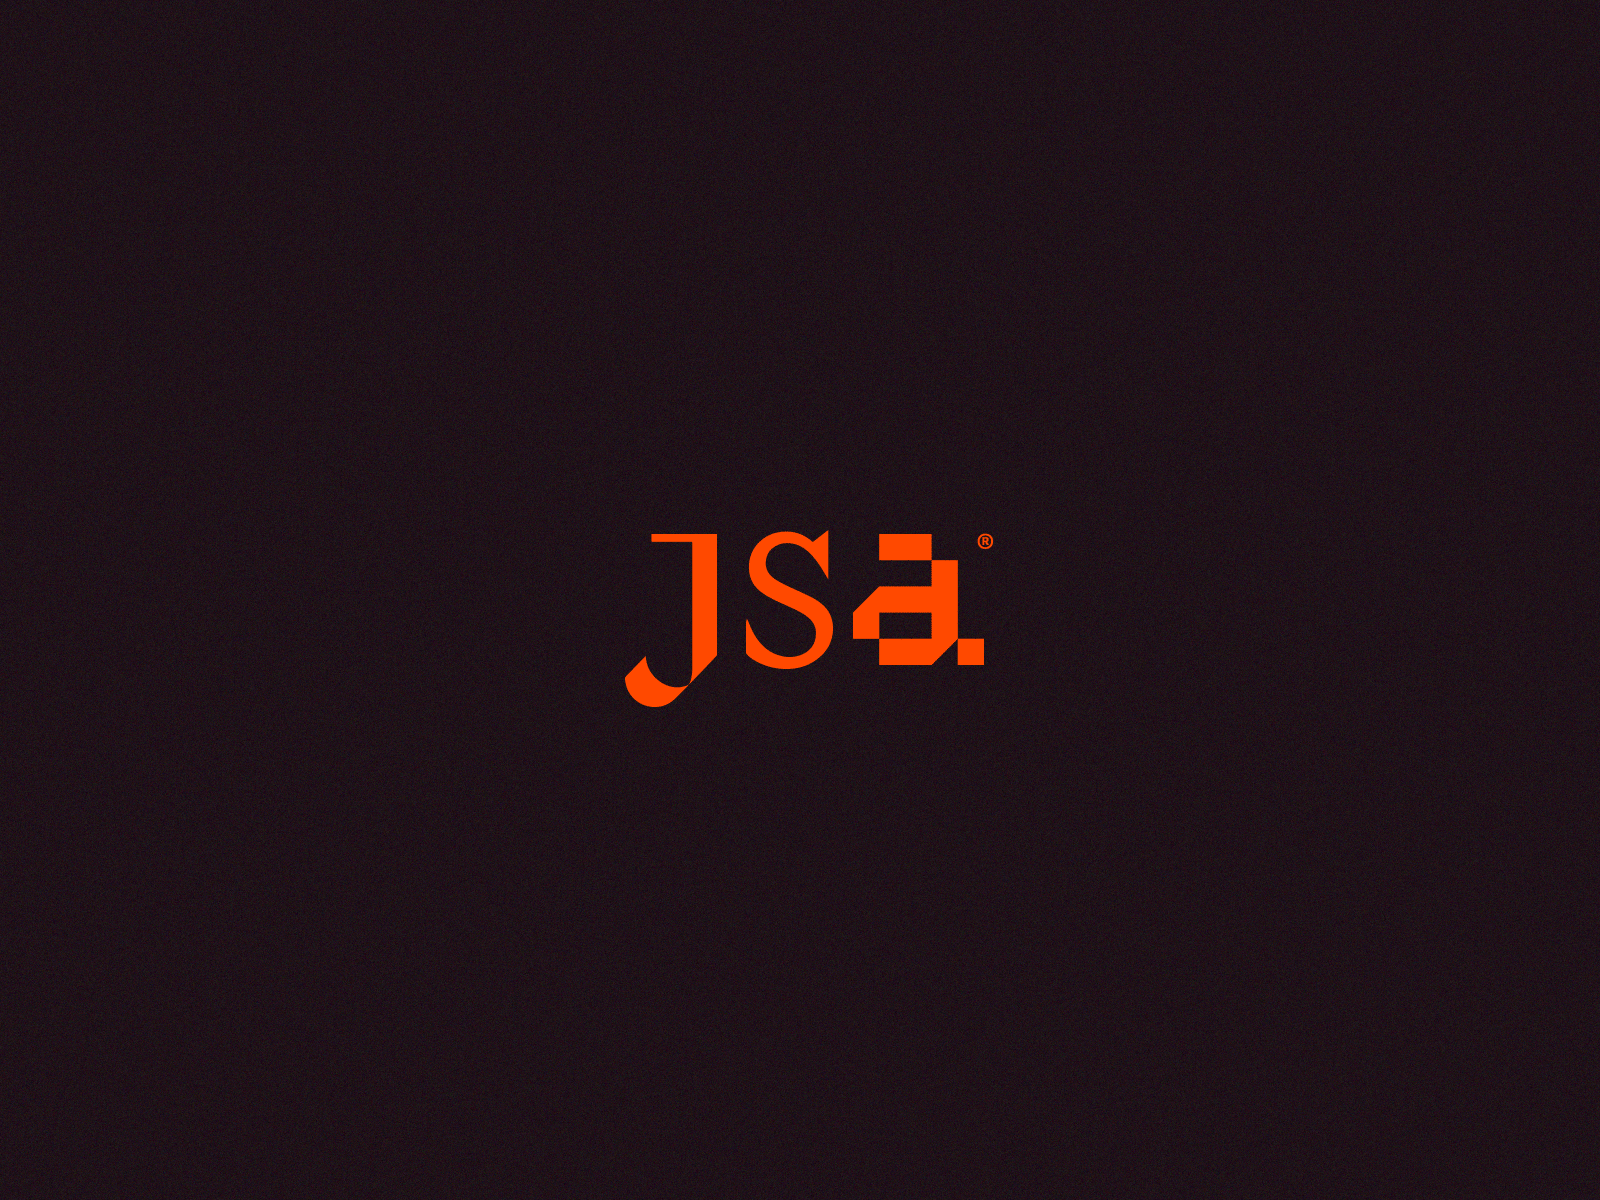 JSA | Brand Ideation